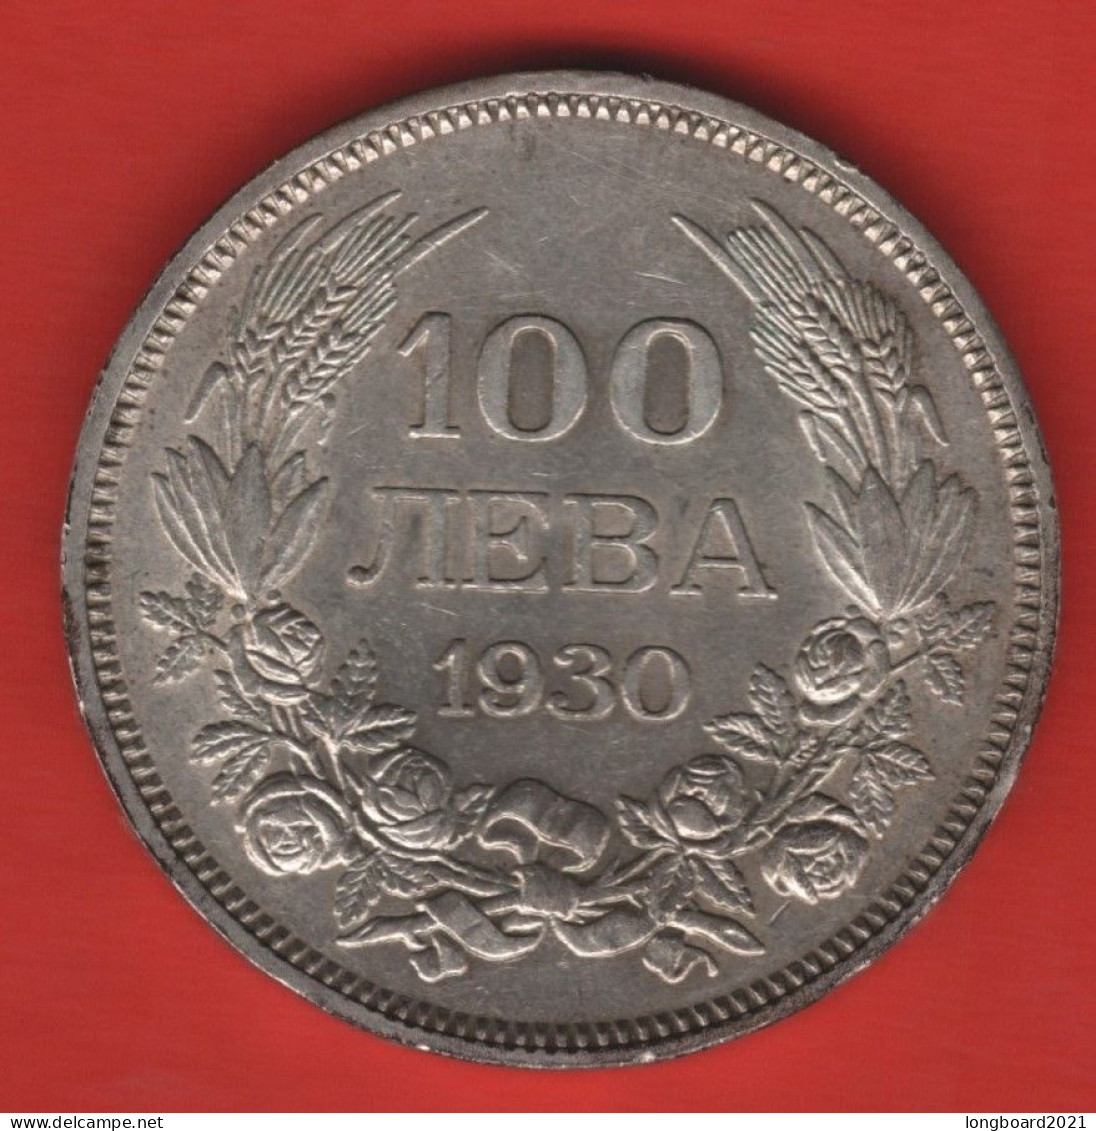 BULGARIA - 100 LEW 1930 -SILVER- - Bulgaria